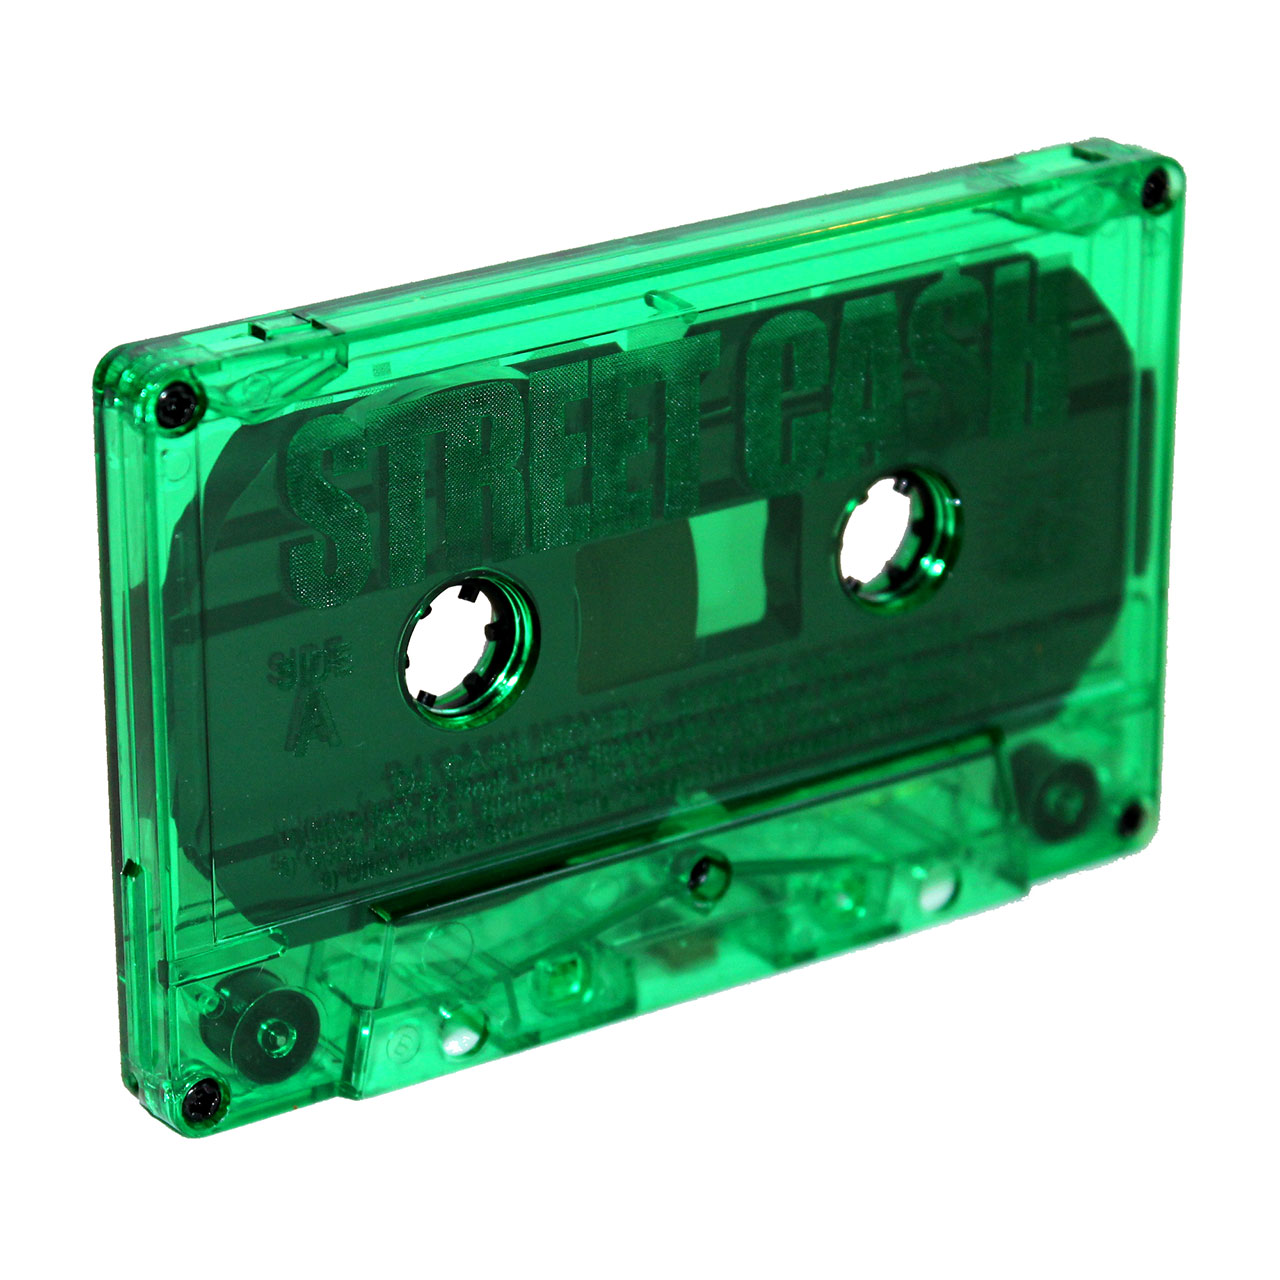 Street Cash w/ laser engraved cassette